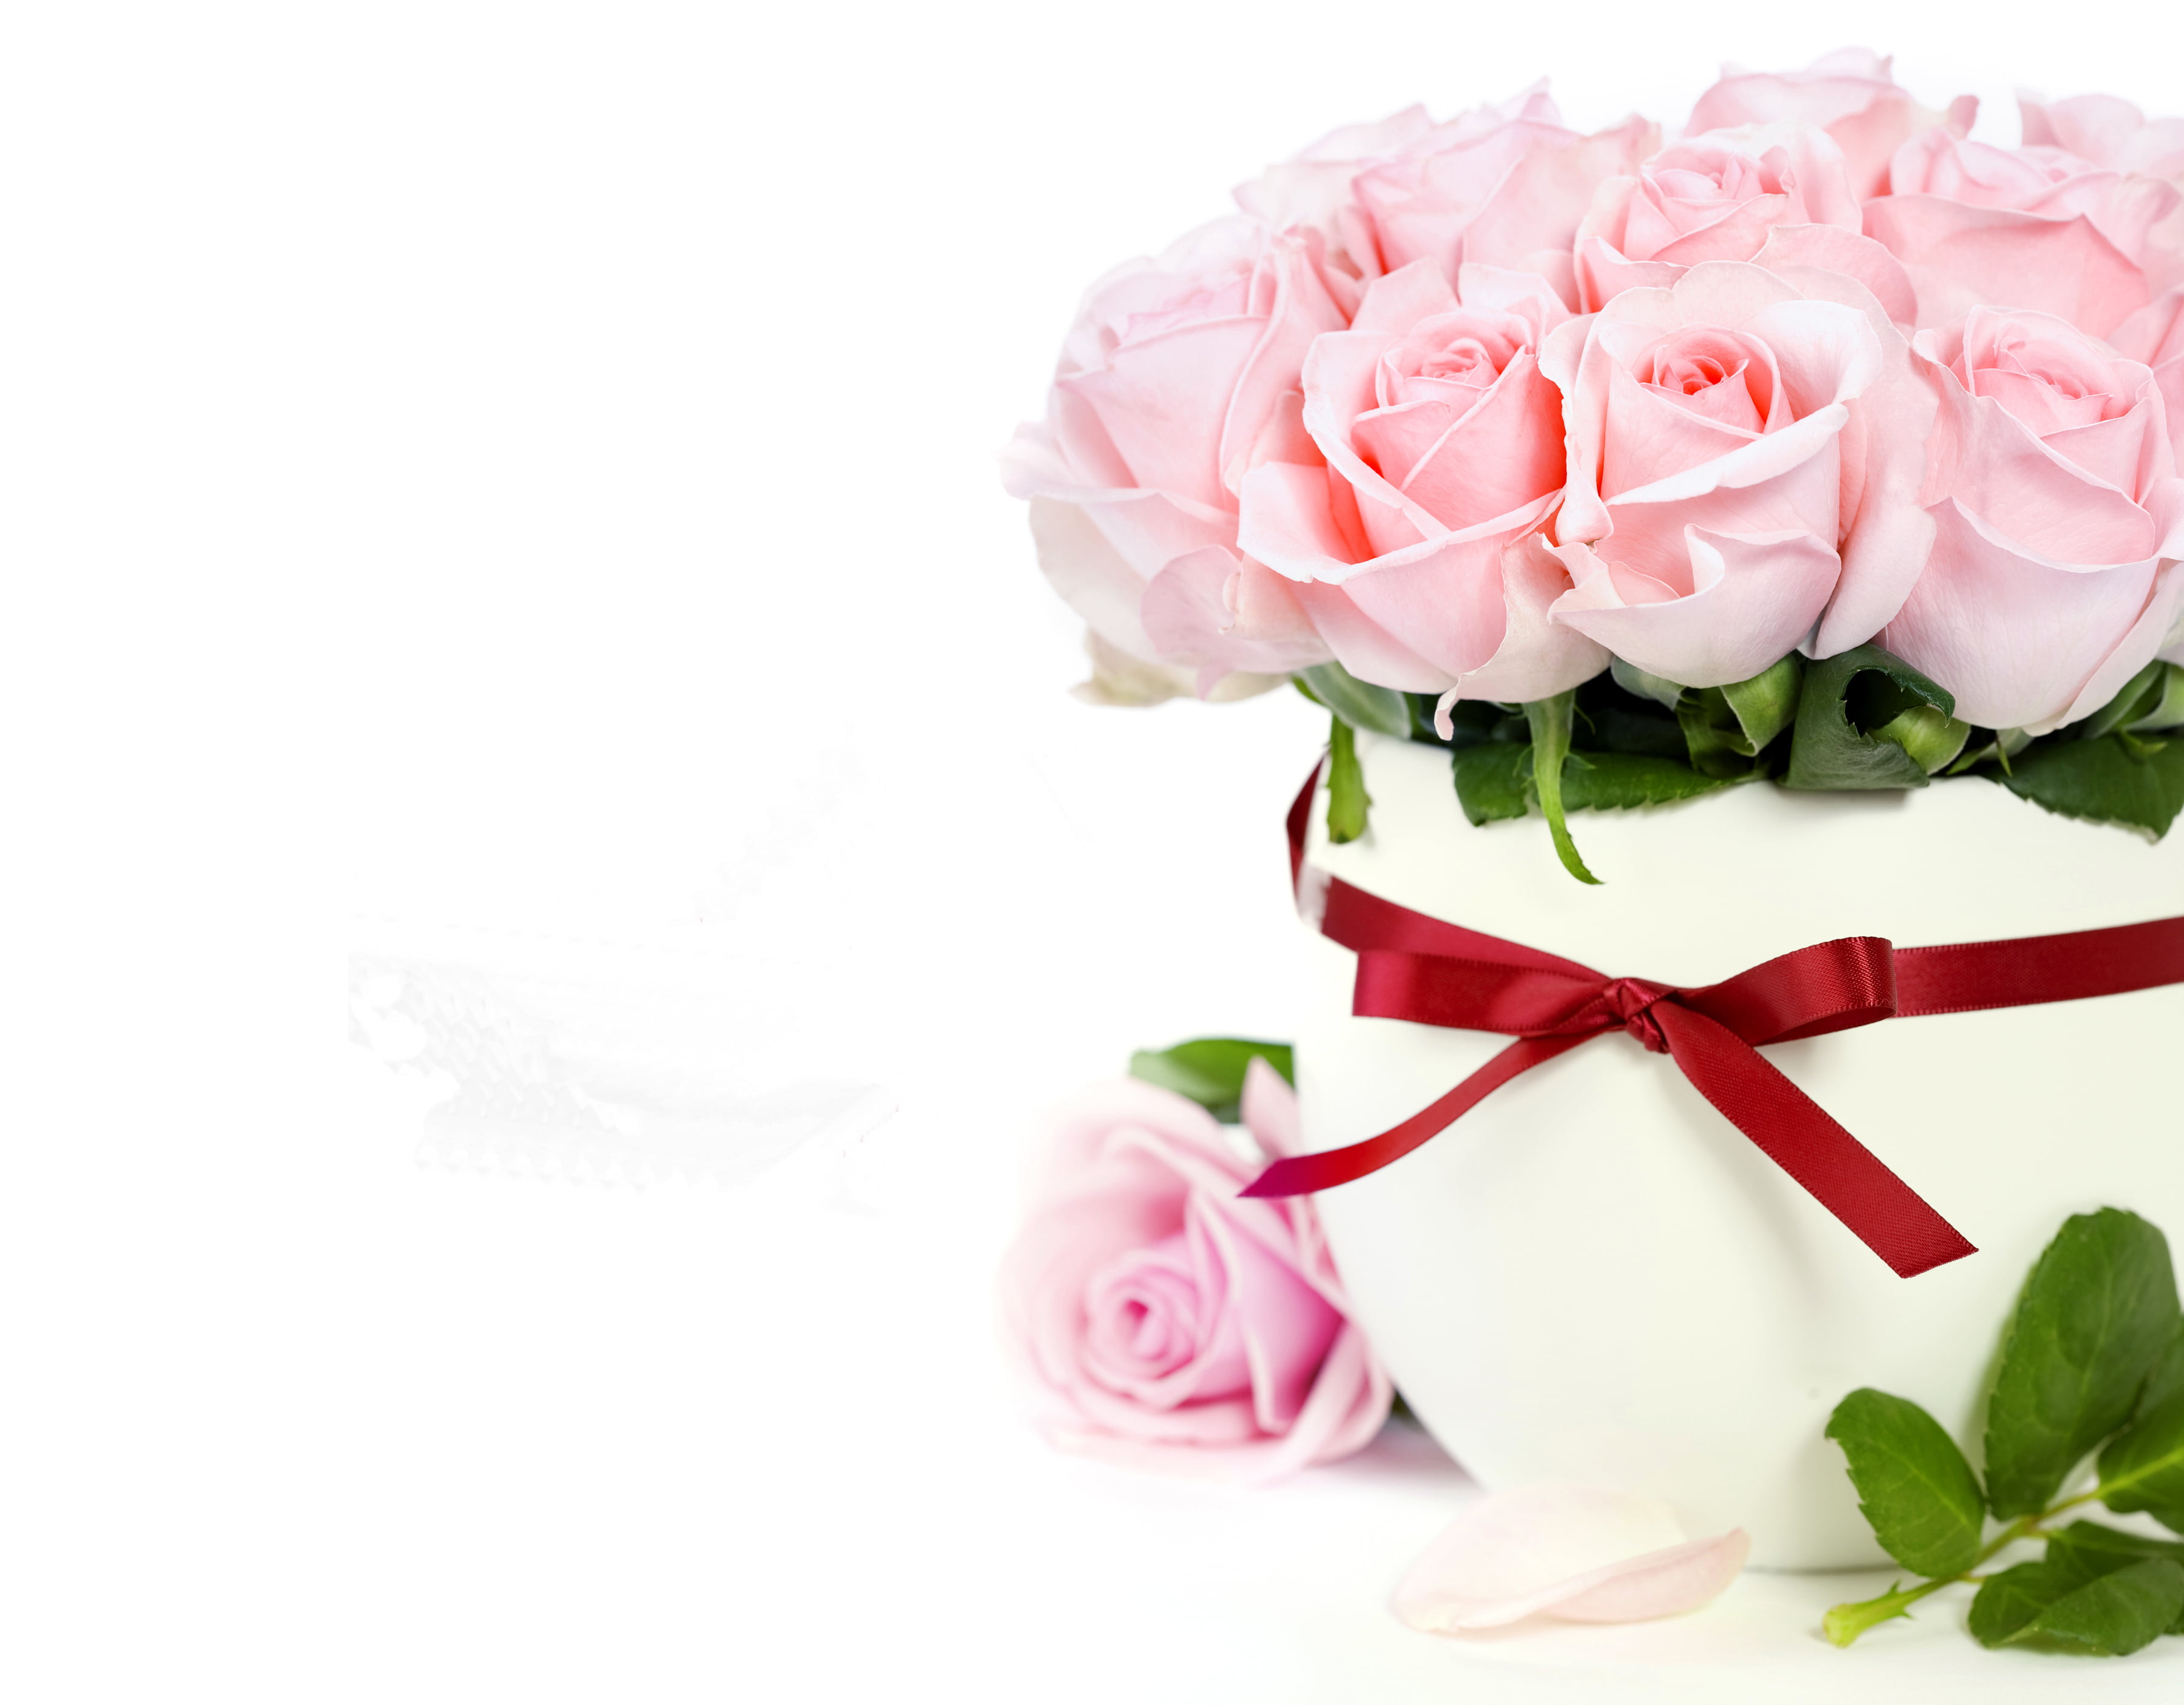 pink rose flower arrangement and white ceramic vase, flowers